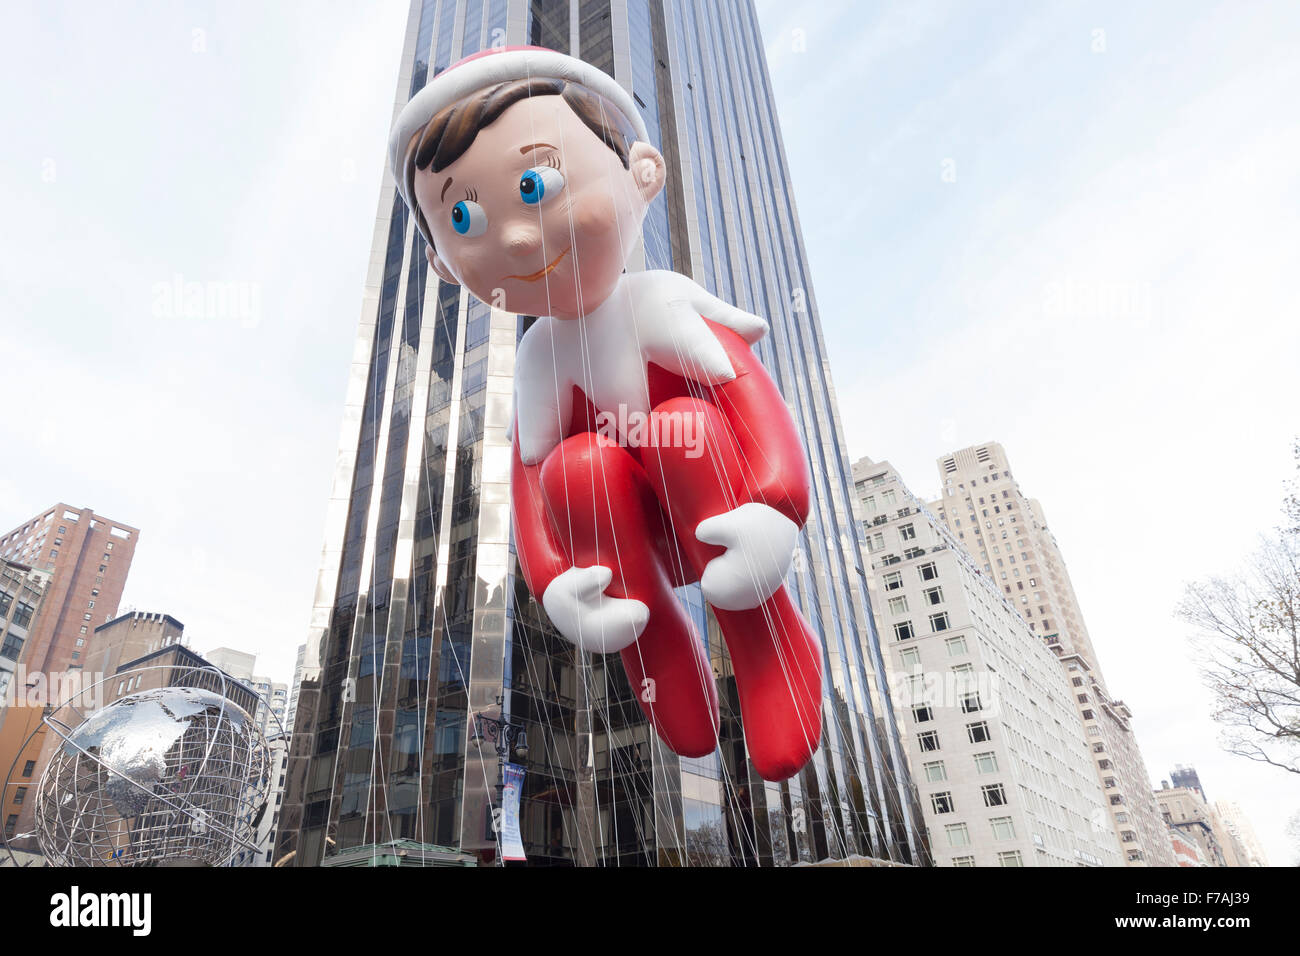 new-york-ny-usa-november-26-2015-giant-elf-on-the-shelf-balloon